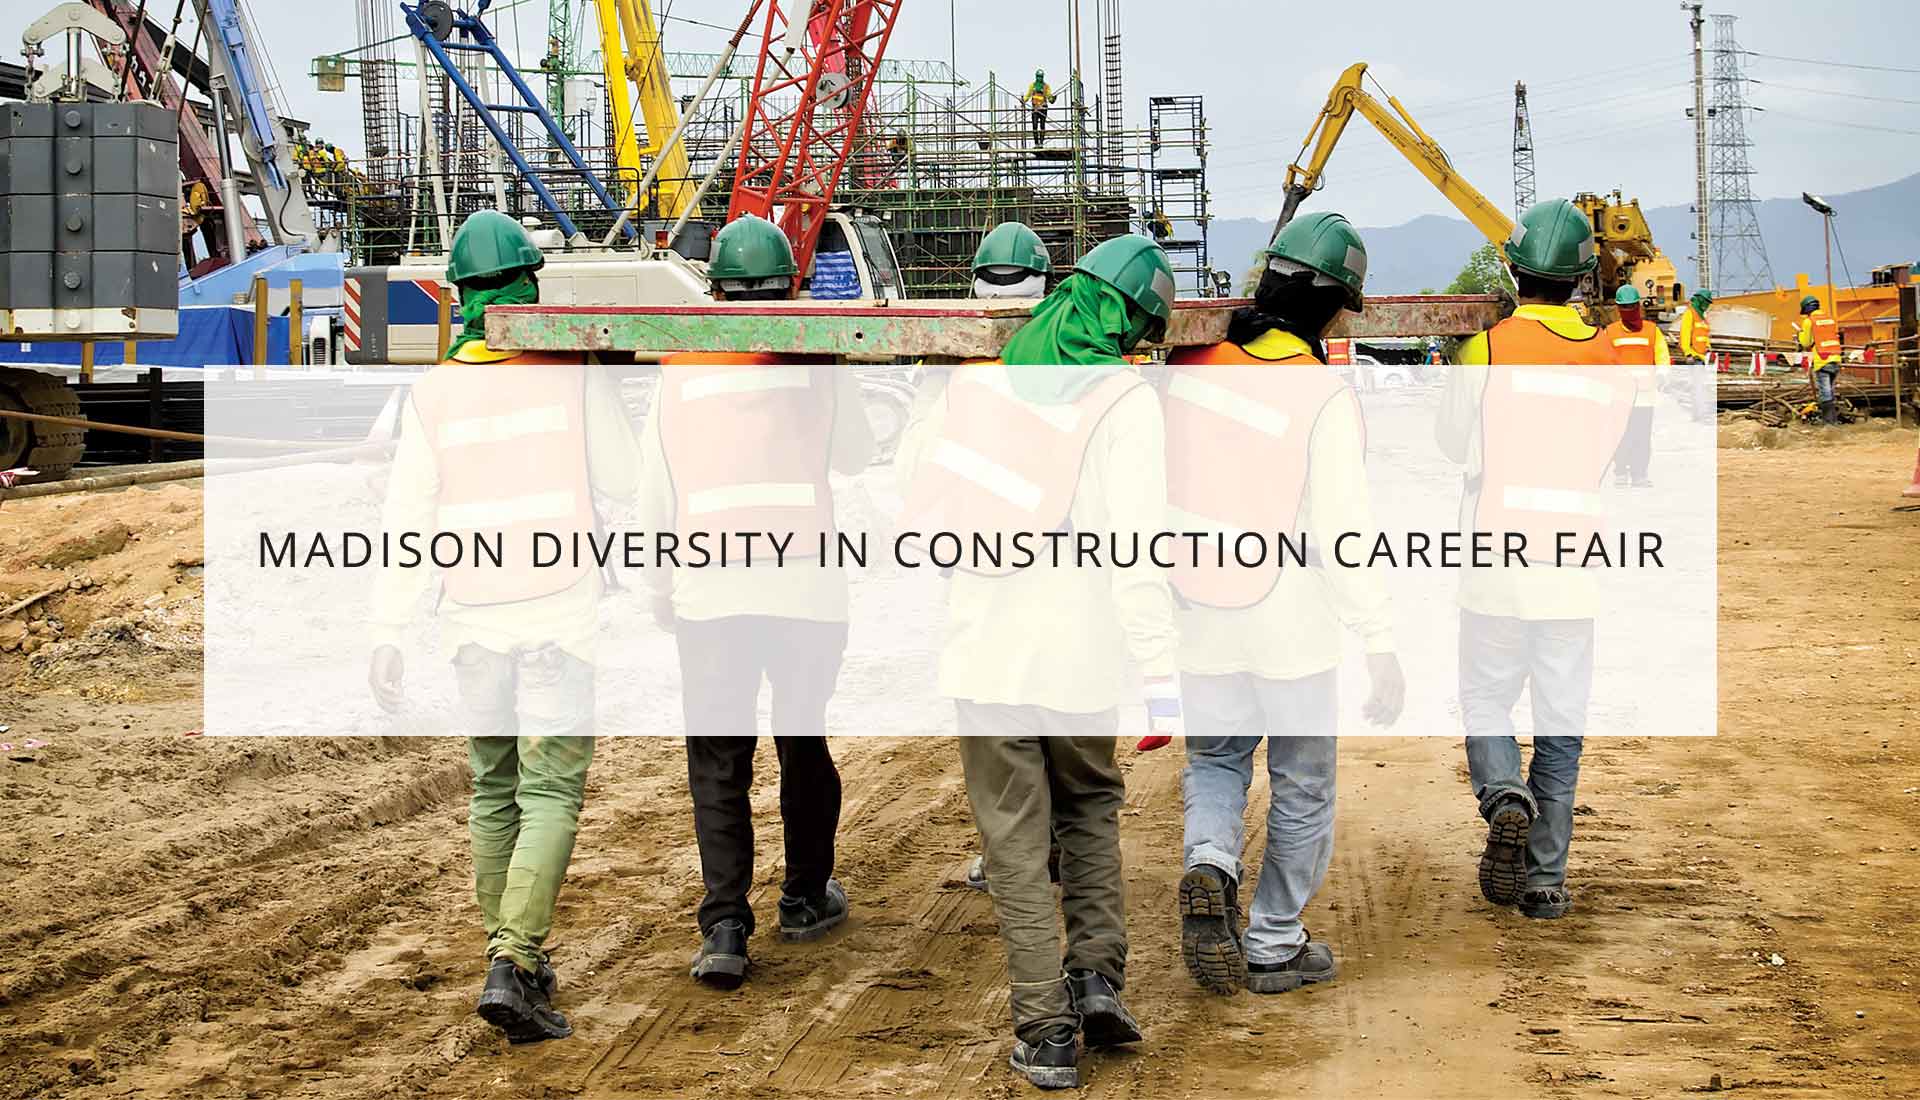 Madison Diversity in Construction Career Fair